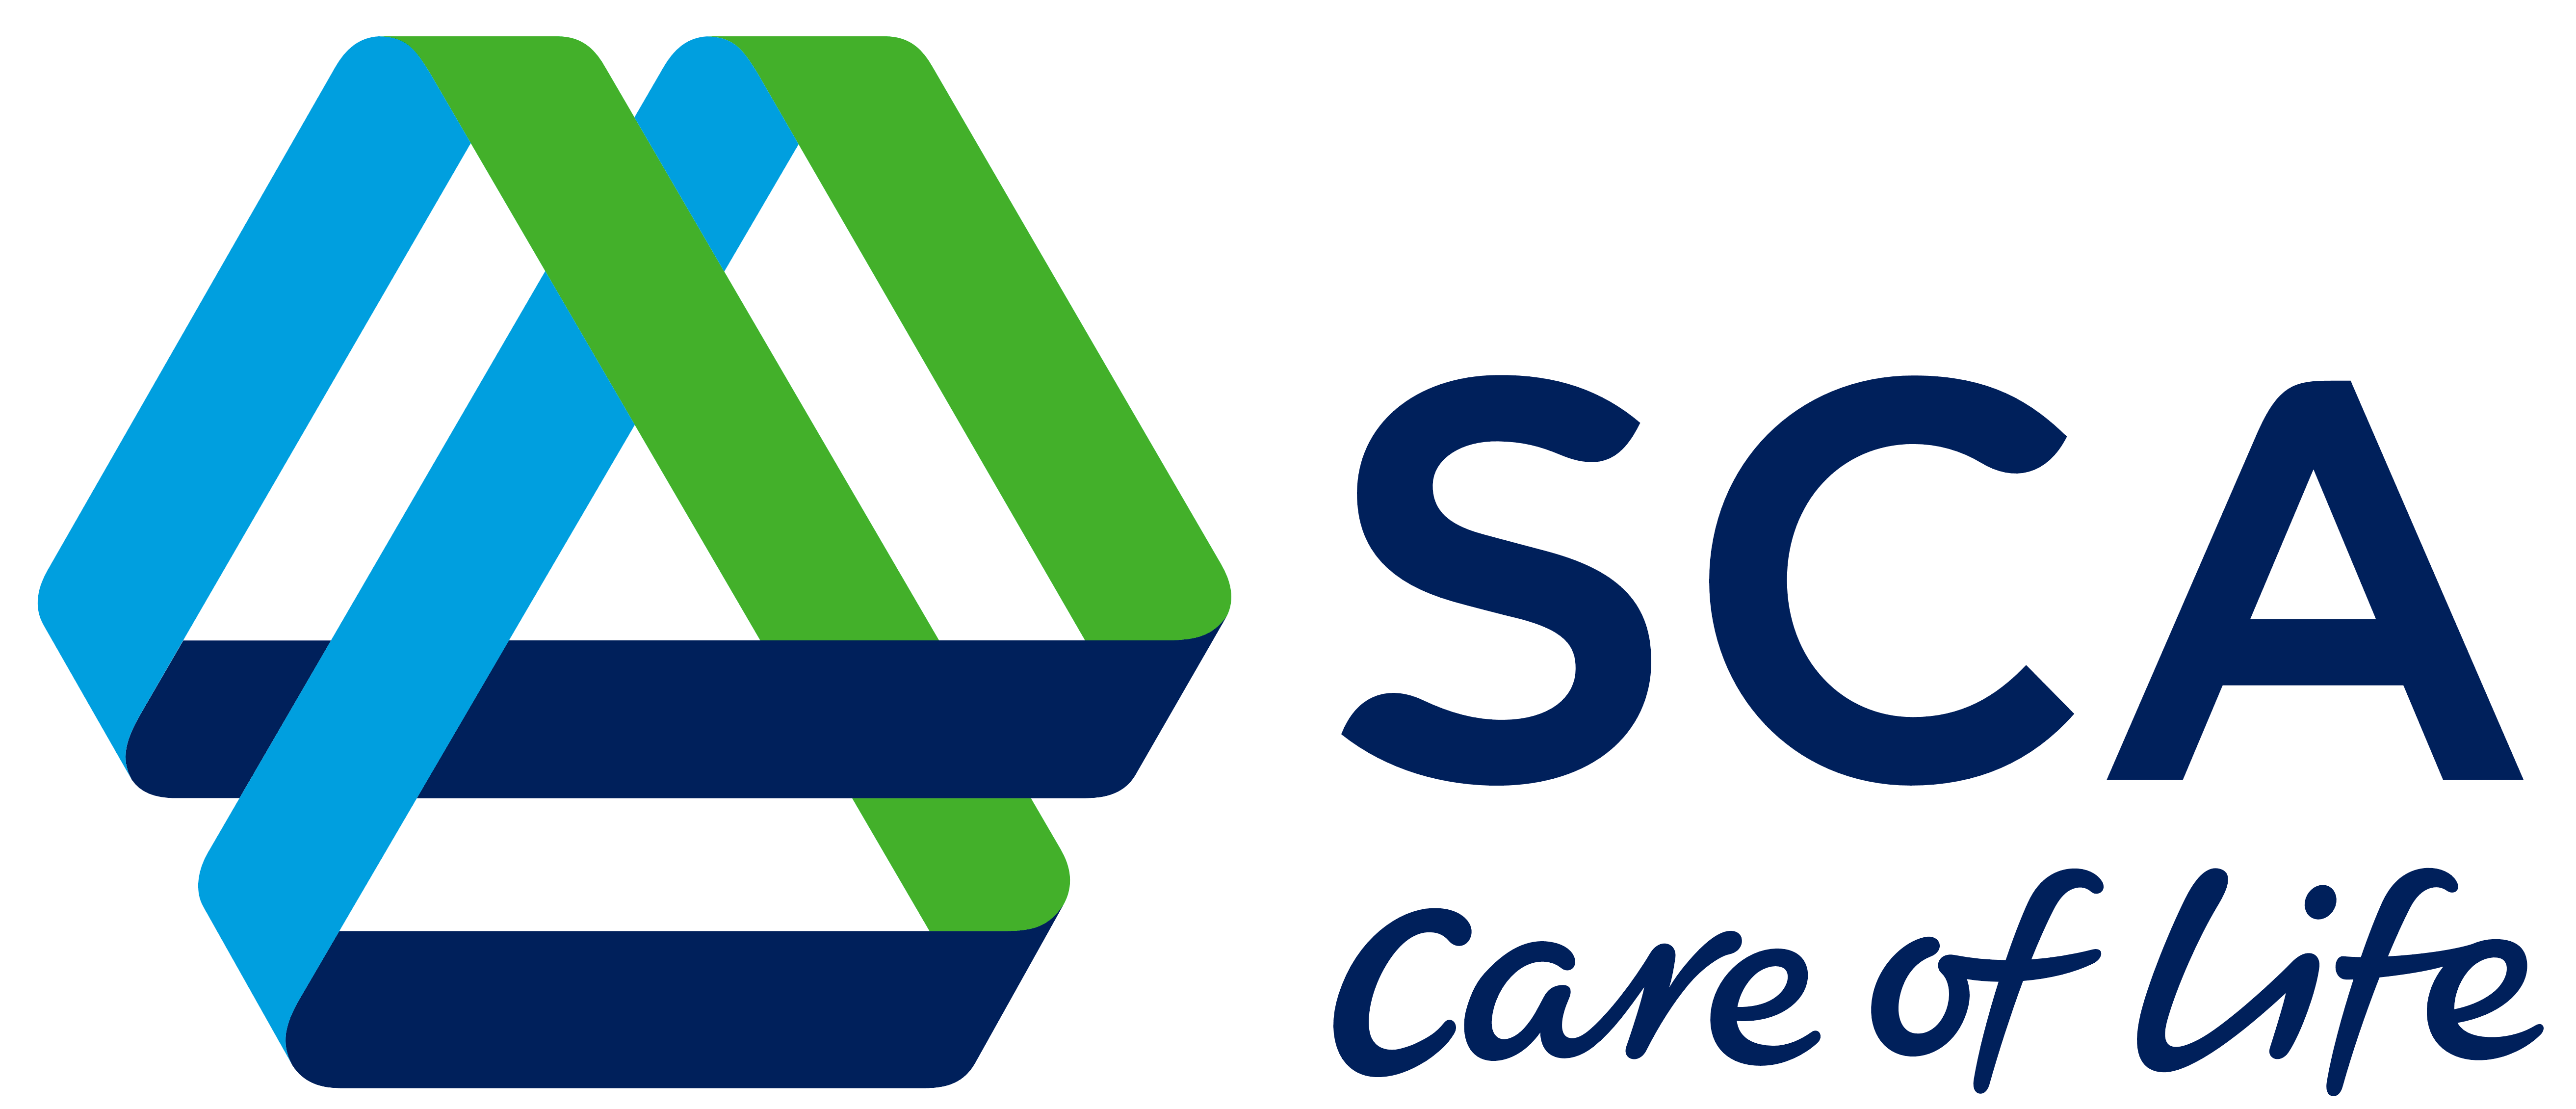 Sca токен. SCA логотип. Логотип Хайджин Продактс. SCA Hygiene products logo. ЭССИЭЙ Хайджин Продактс раша лого.